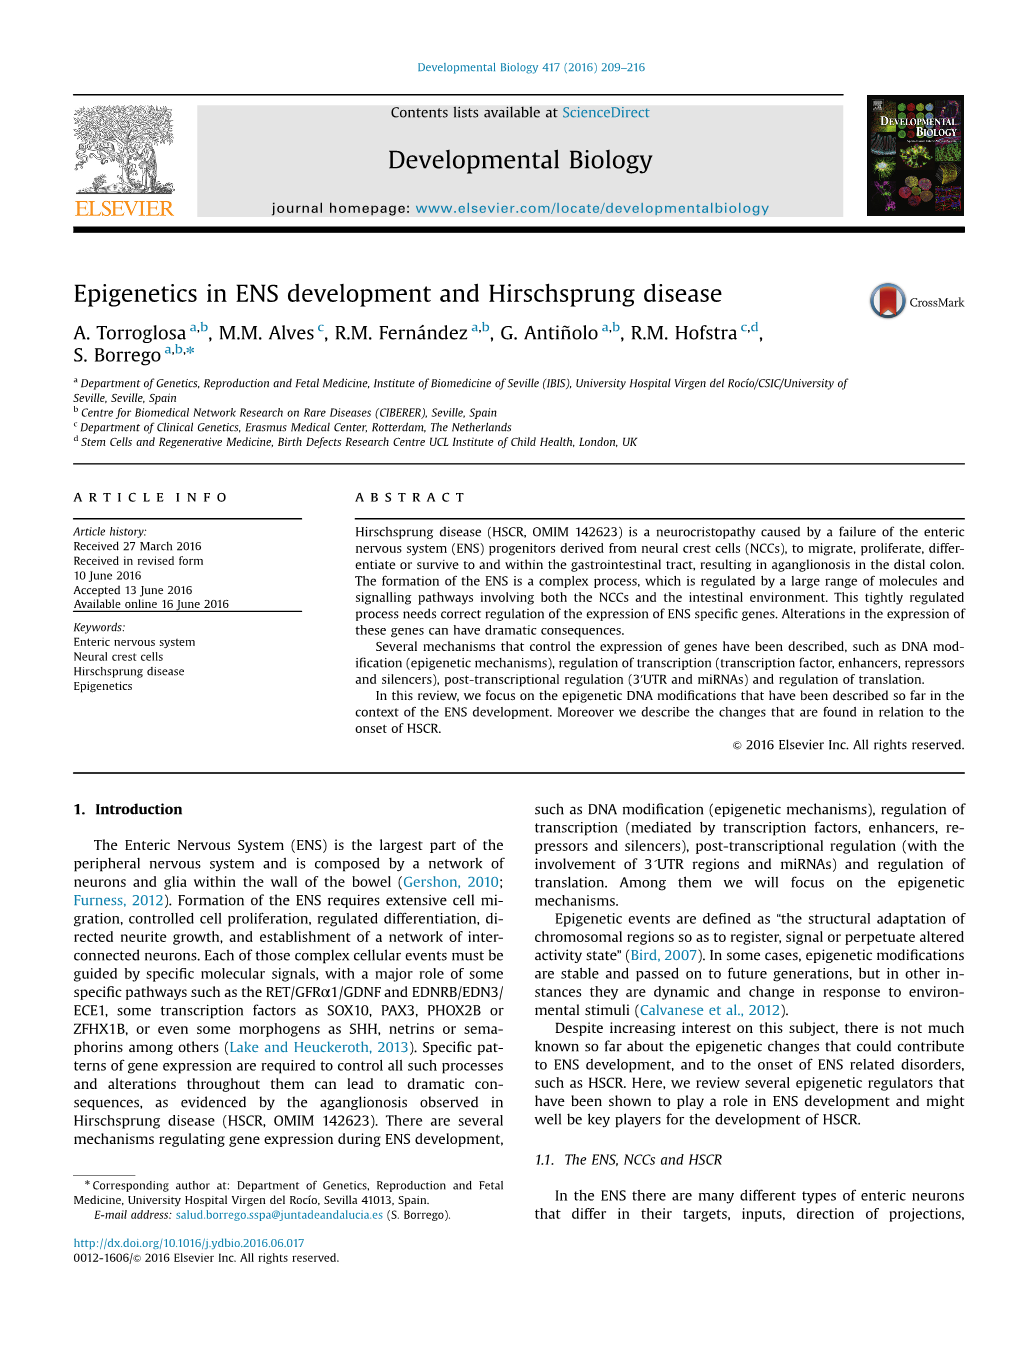 Epigenetics in ENS Development and Hirschsprung Disease